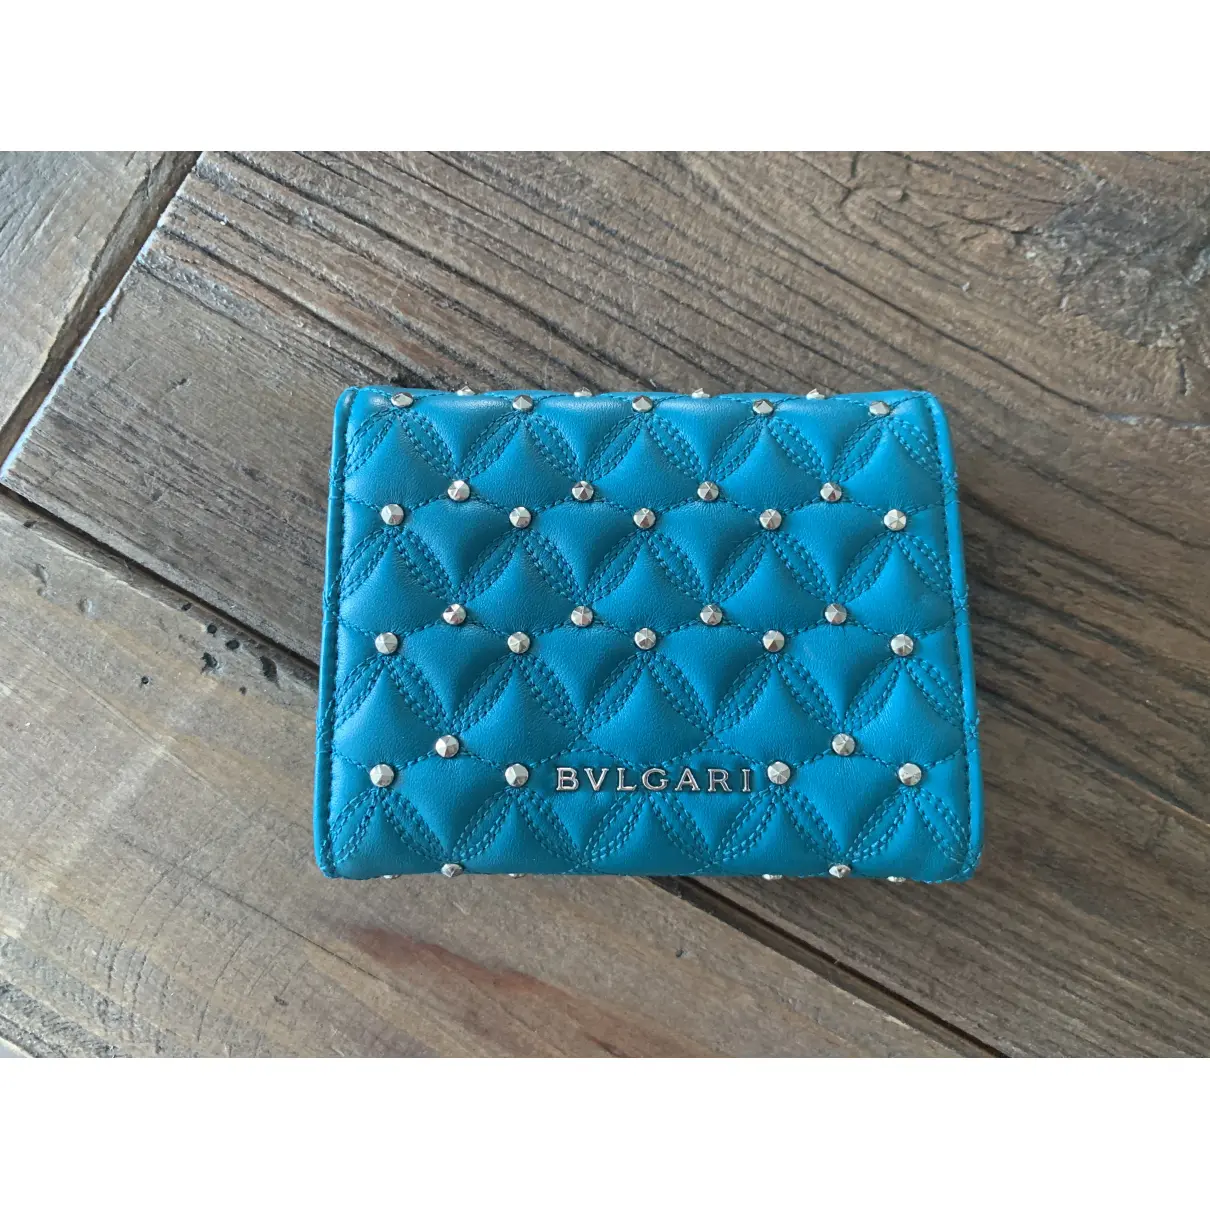 Buy Bvlgari Leather wallet online